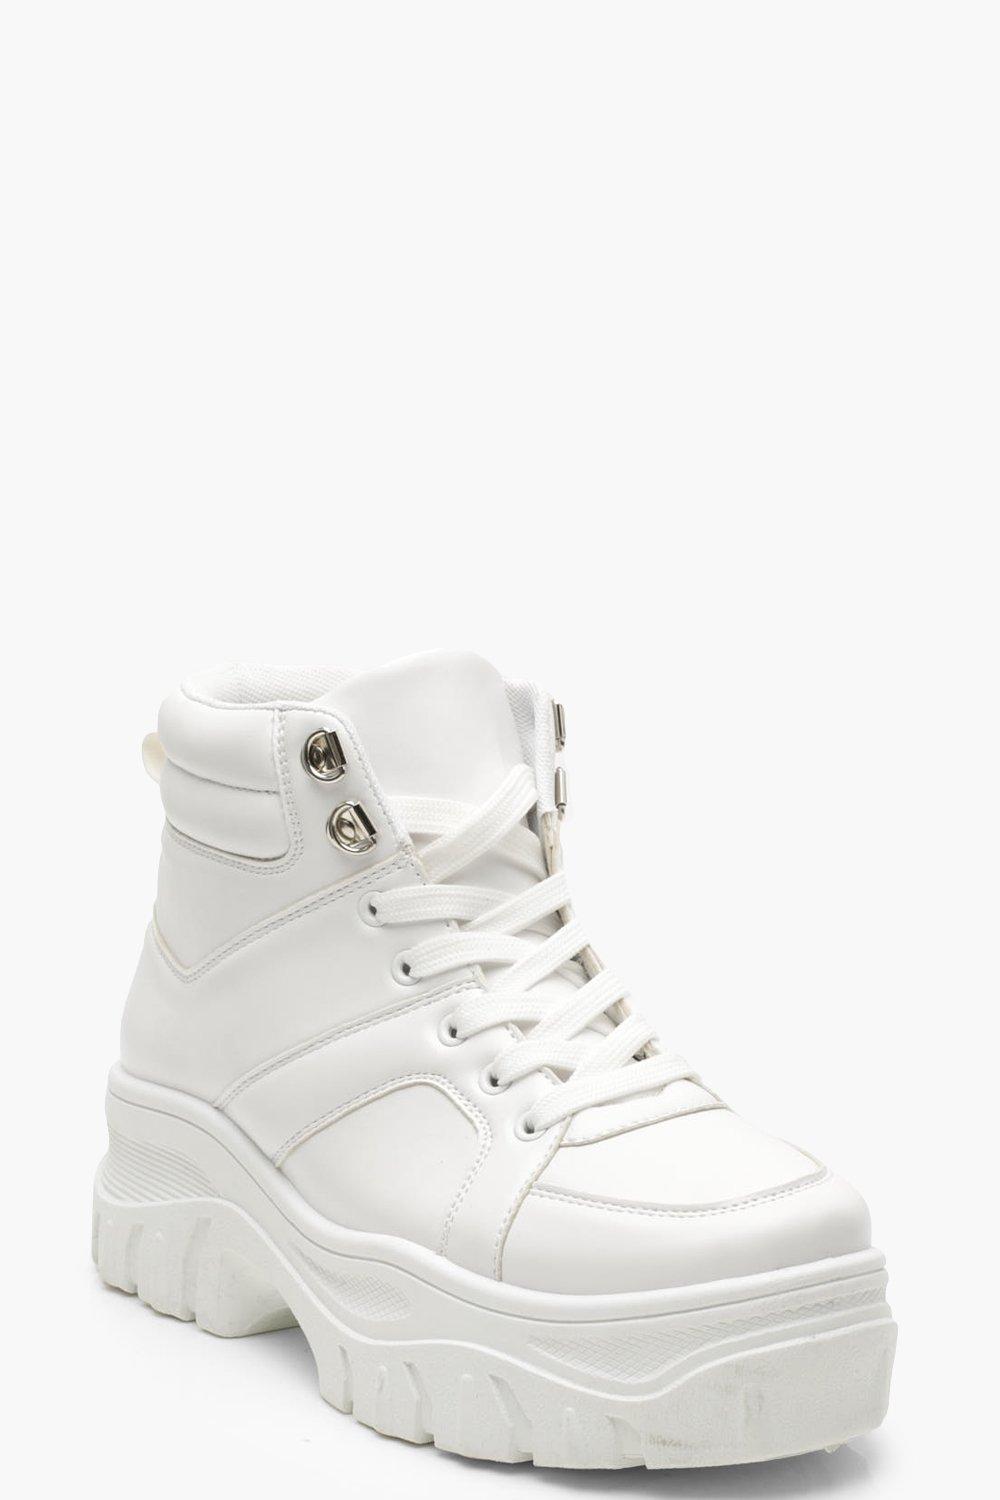 chunky white sneakers cheap